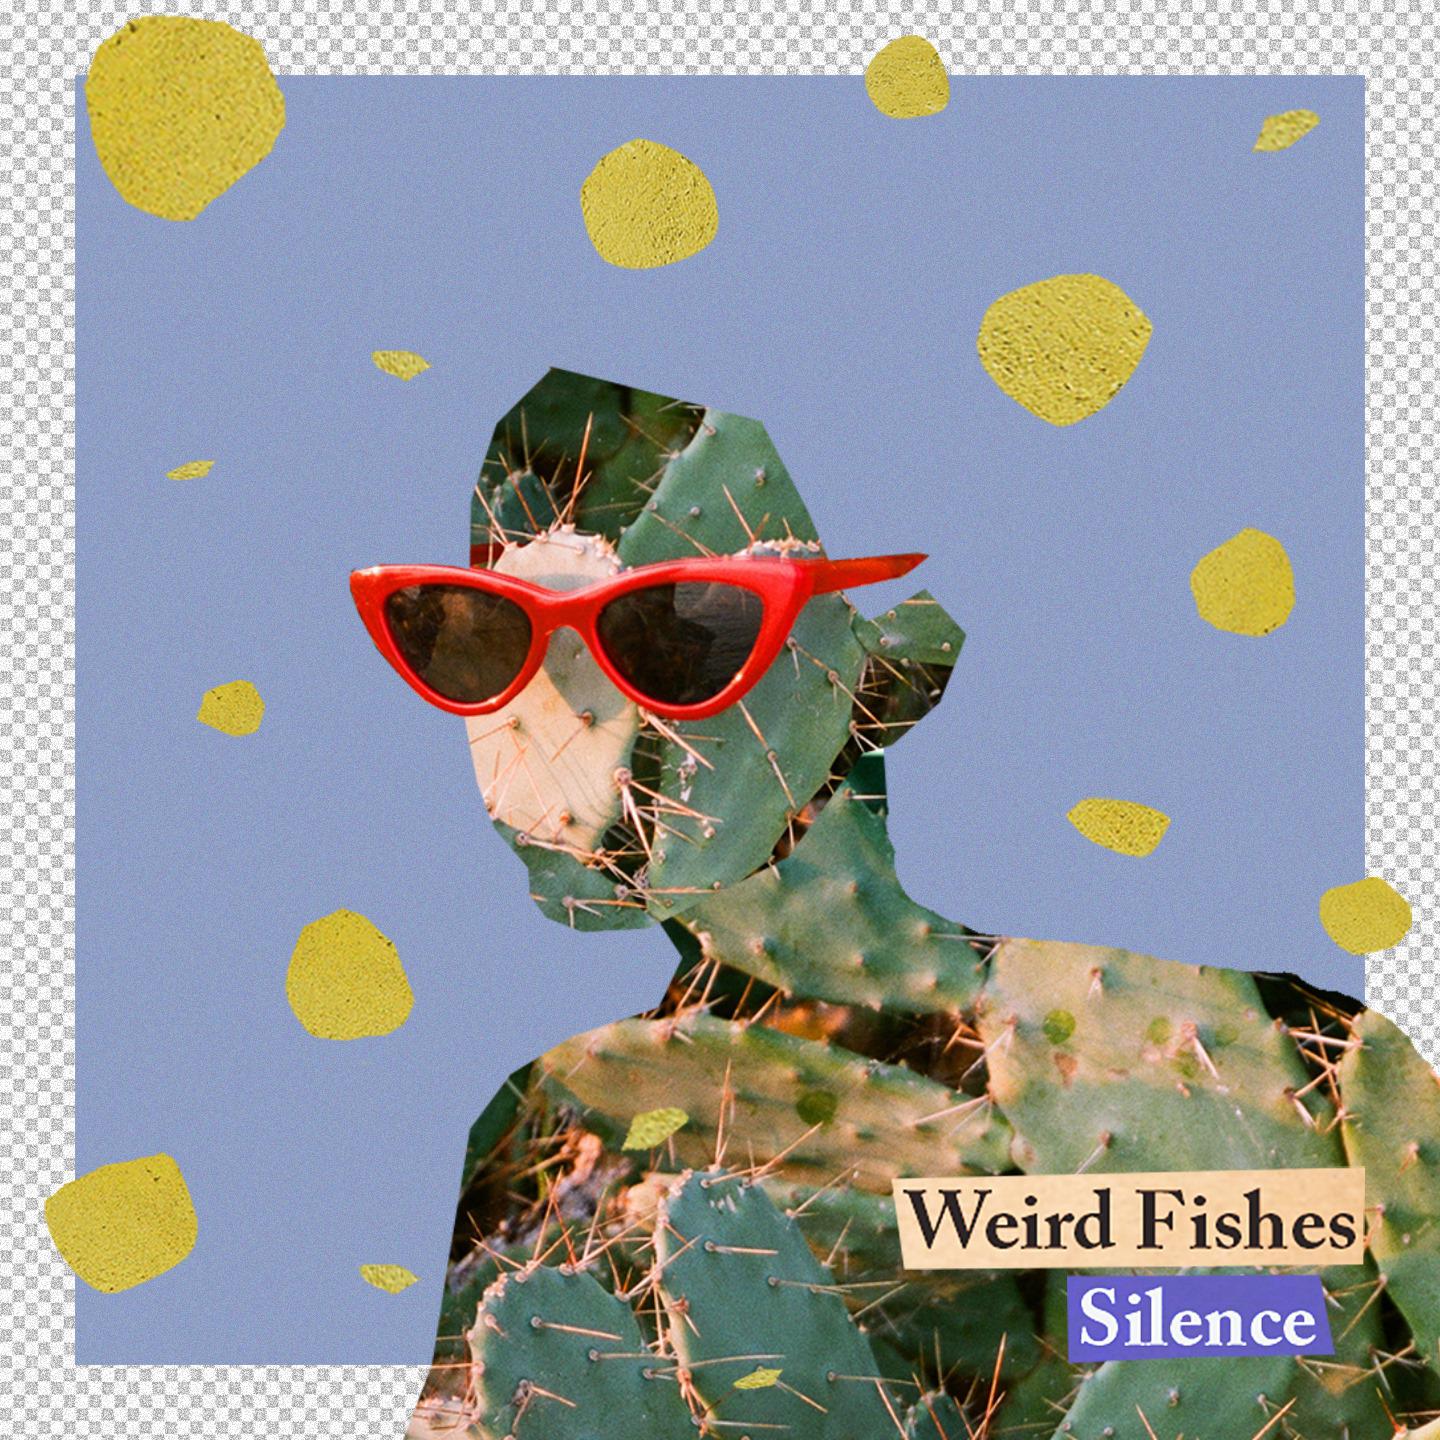 Weird Fishes - Silence